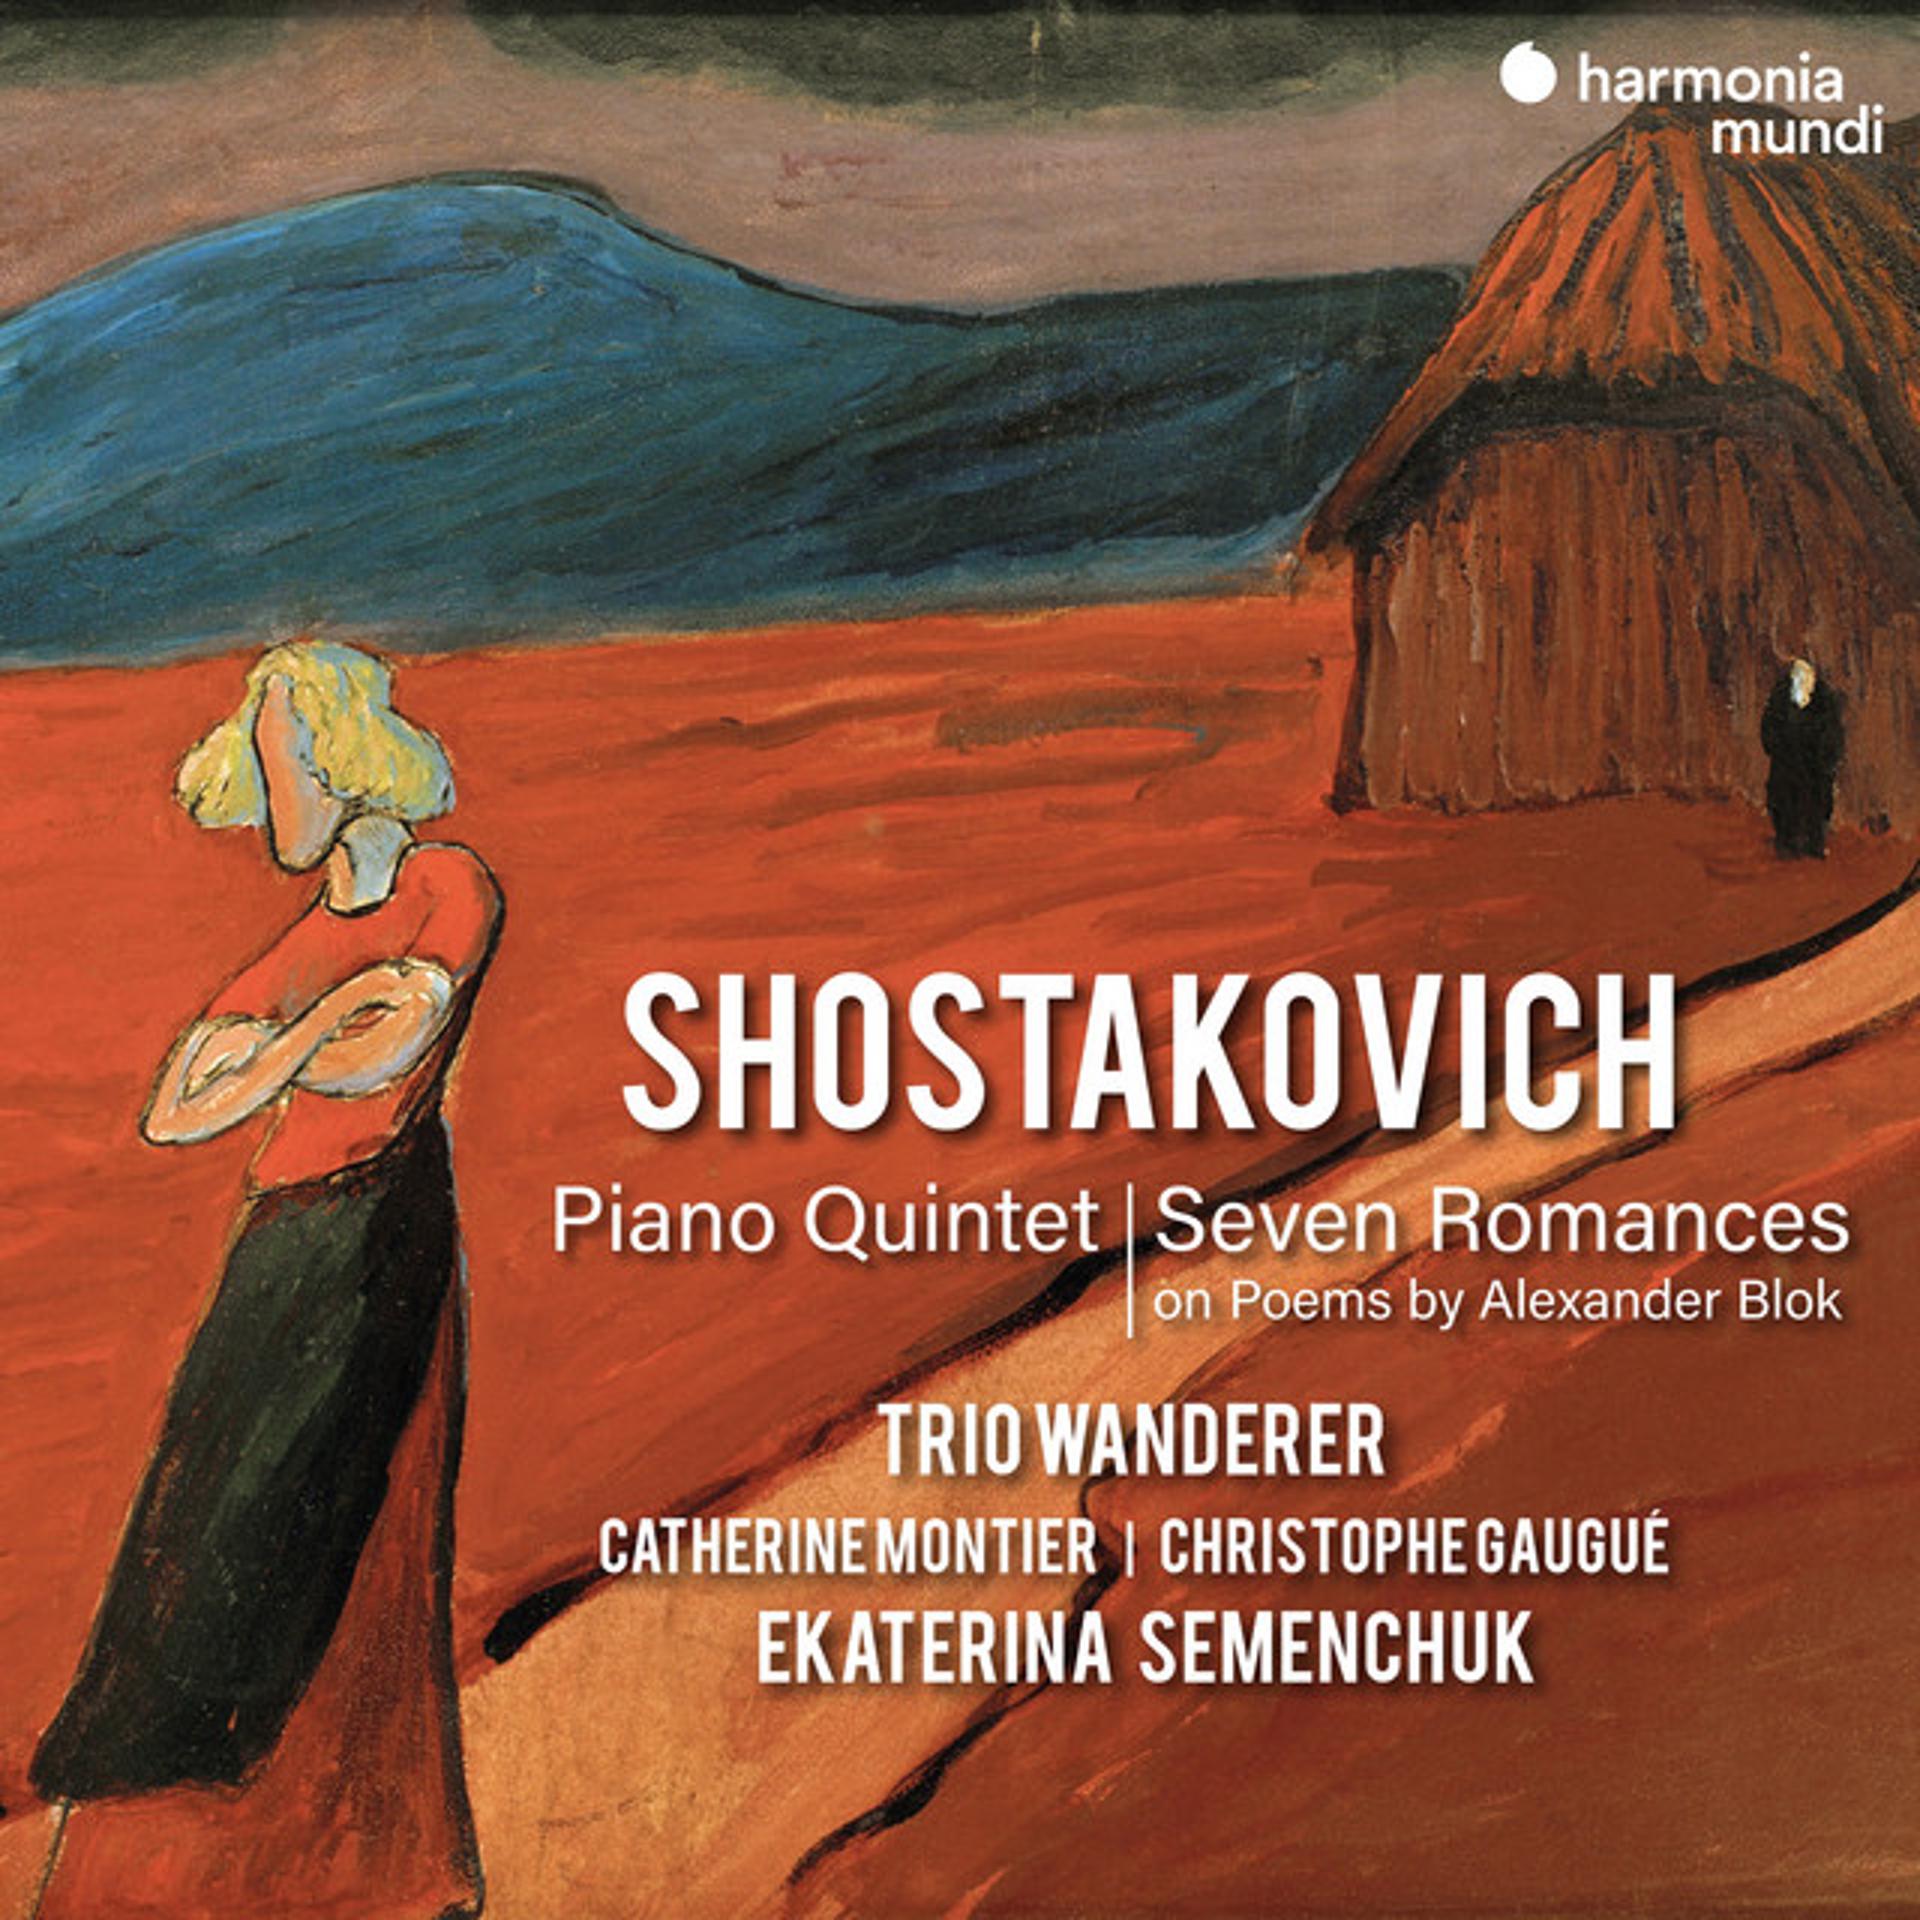 Шостакович трио. Шостакович испанские песни. Shostakovich - Piano Trios, Seven Romances - the Florestan Trio. Испанские песни Шостакович Прощай Гренада.